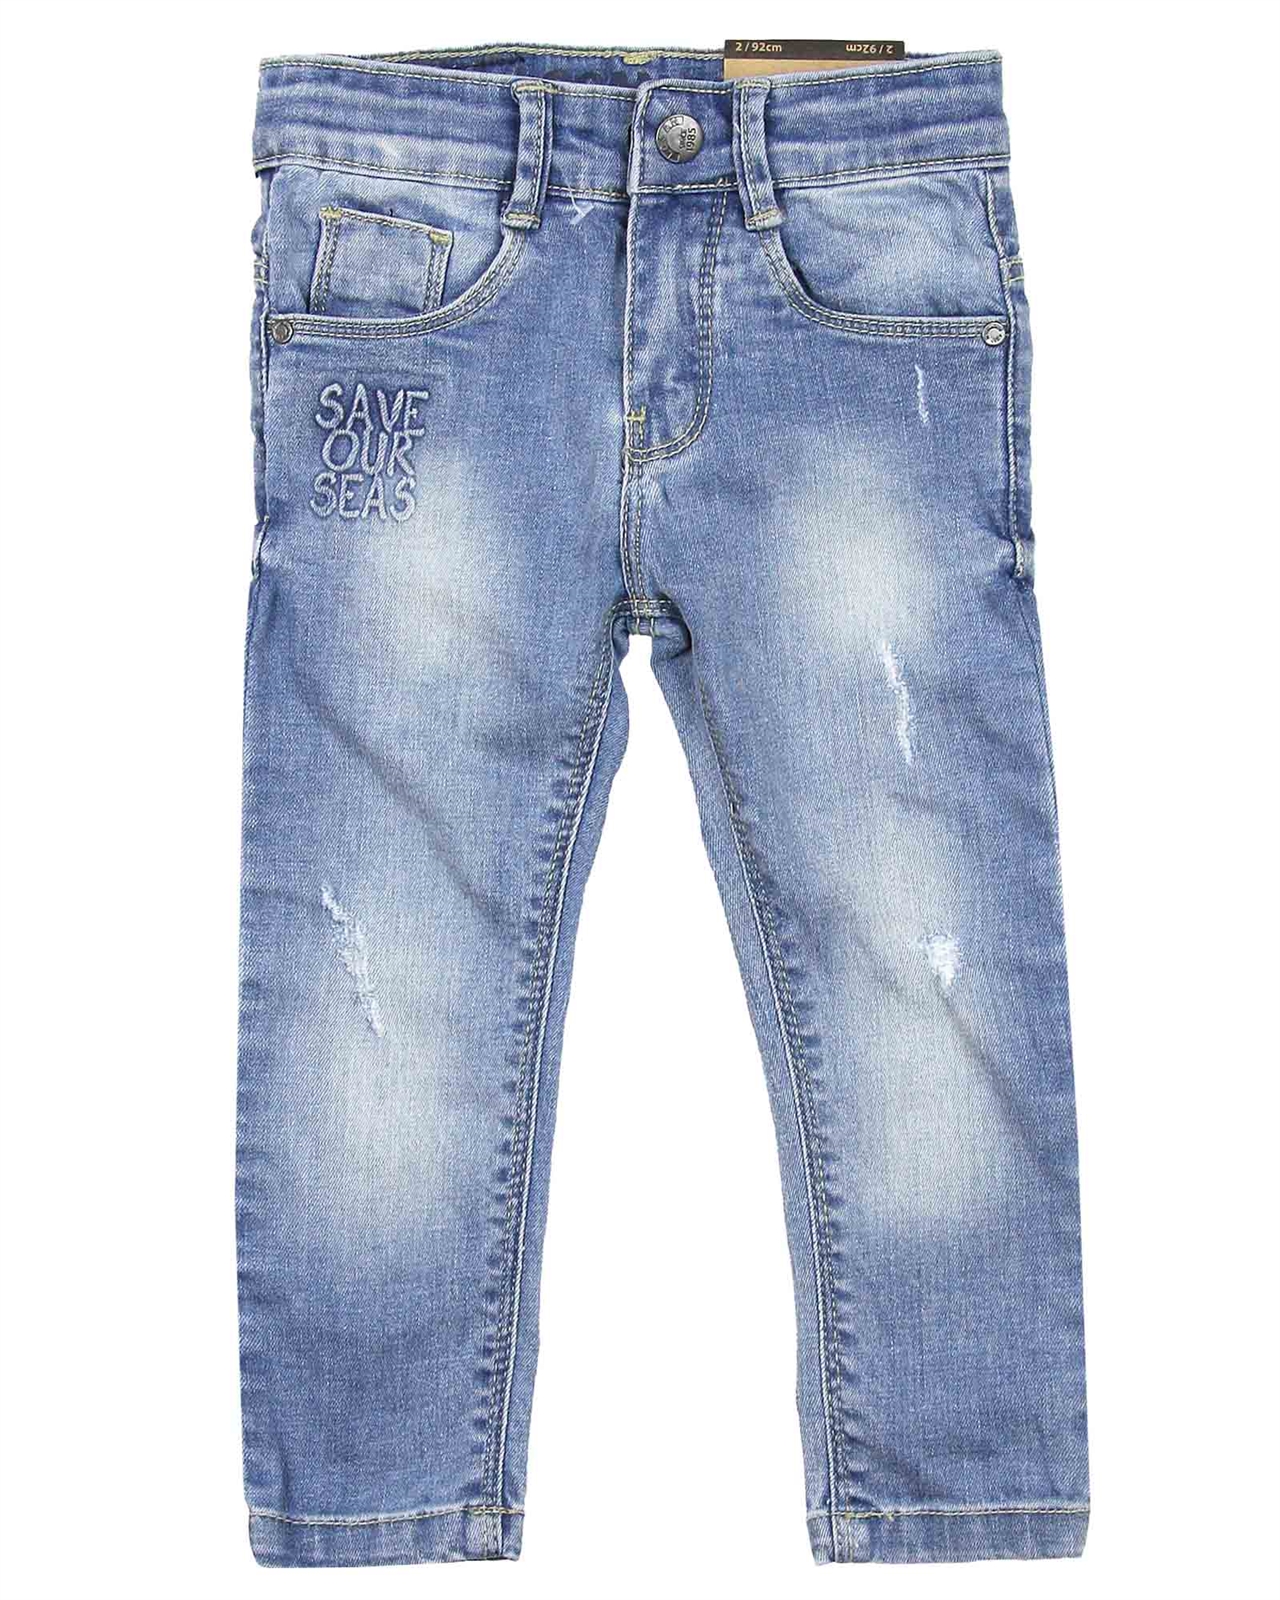 Losan Boys Slim Fit Jeans in Light Blue Wash - Losan - Losan Spring ...